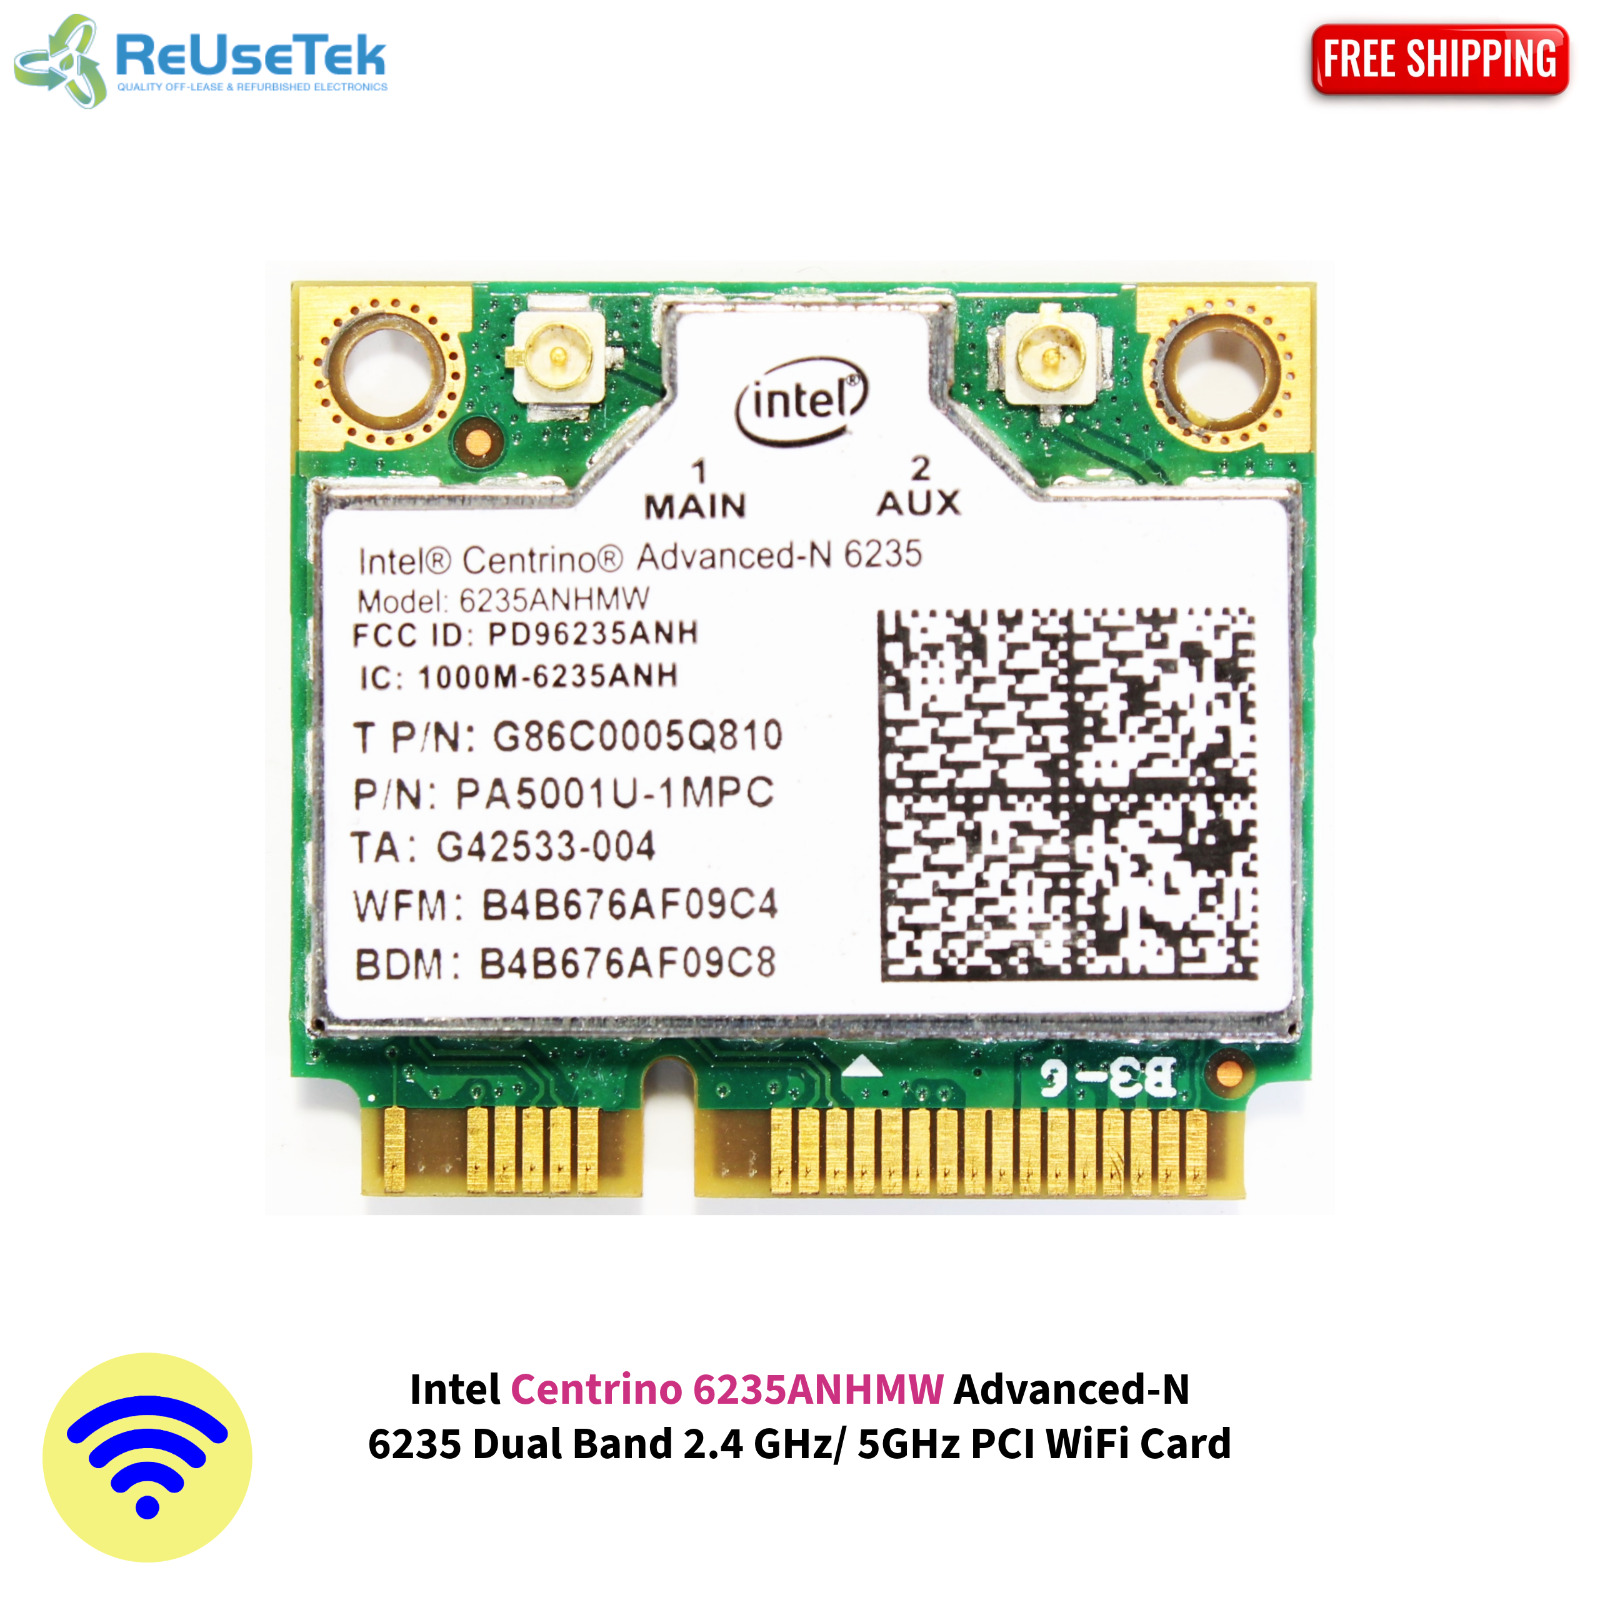 Intel Centrino 6235ANHMW Advanced-N 6235 Dual Band 2.4 GHz/ 5GHz PCI WiFi Card